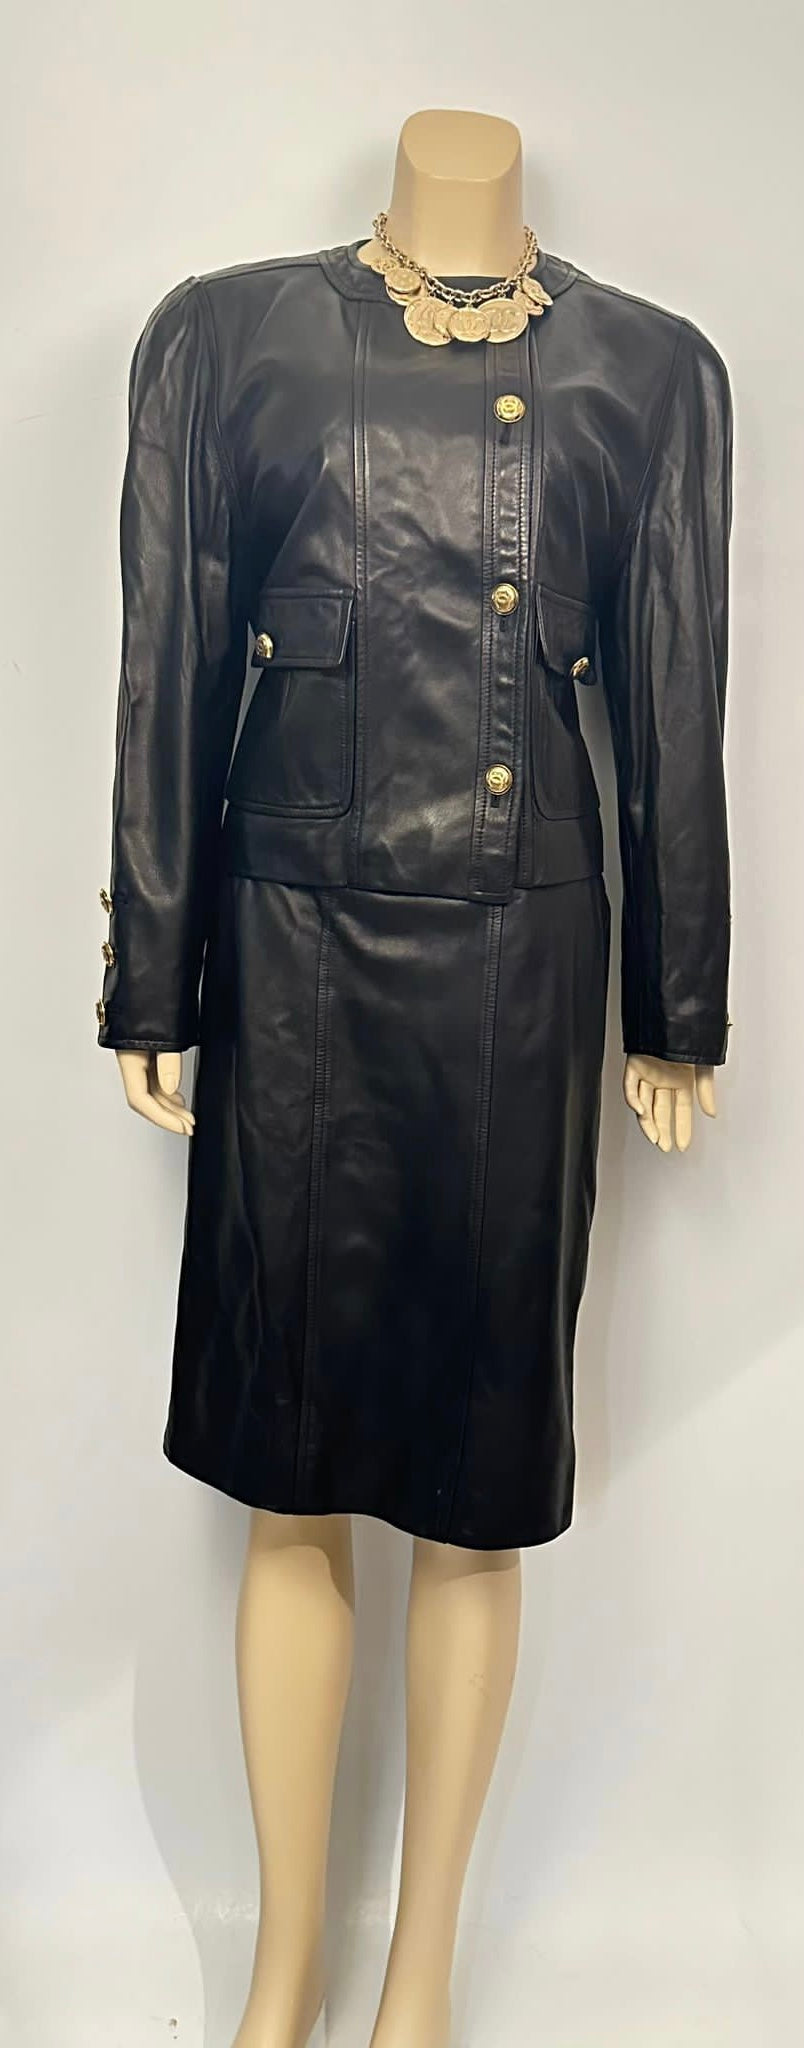 Rare Chanel Vintage 1980/1990 Black Leather Jacket and Skirt Suit FR 42